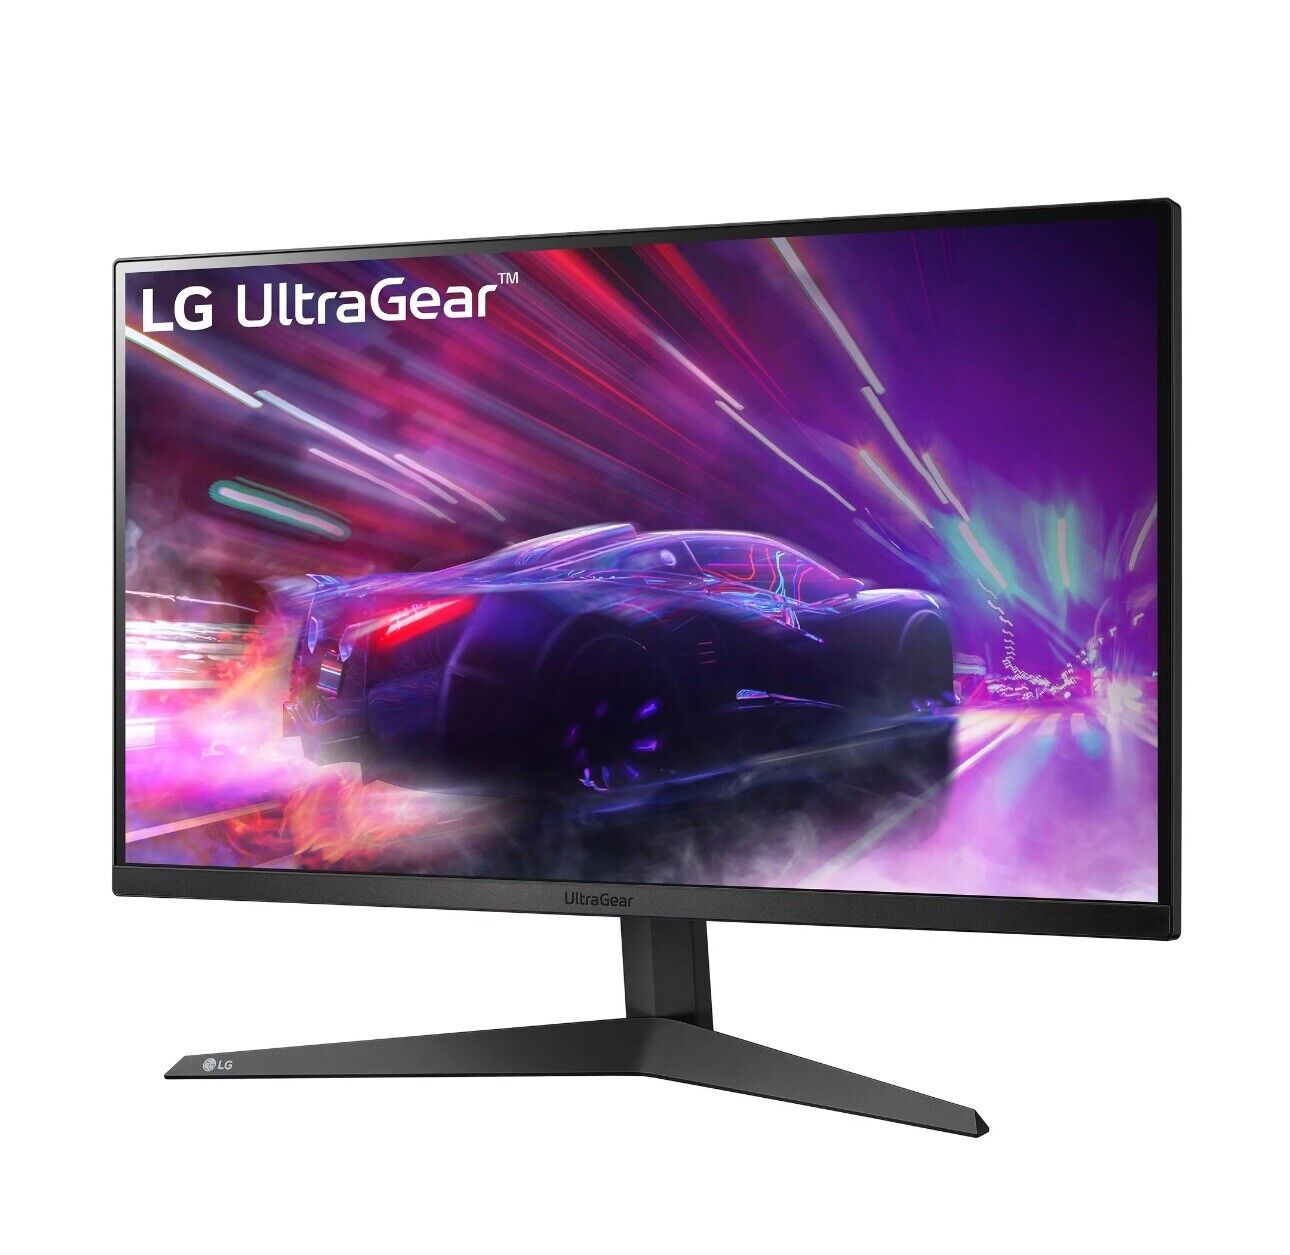 New LG UltraGear 27 inch Widescreen FHD Monitor - 27GQ40W-B